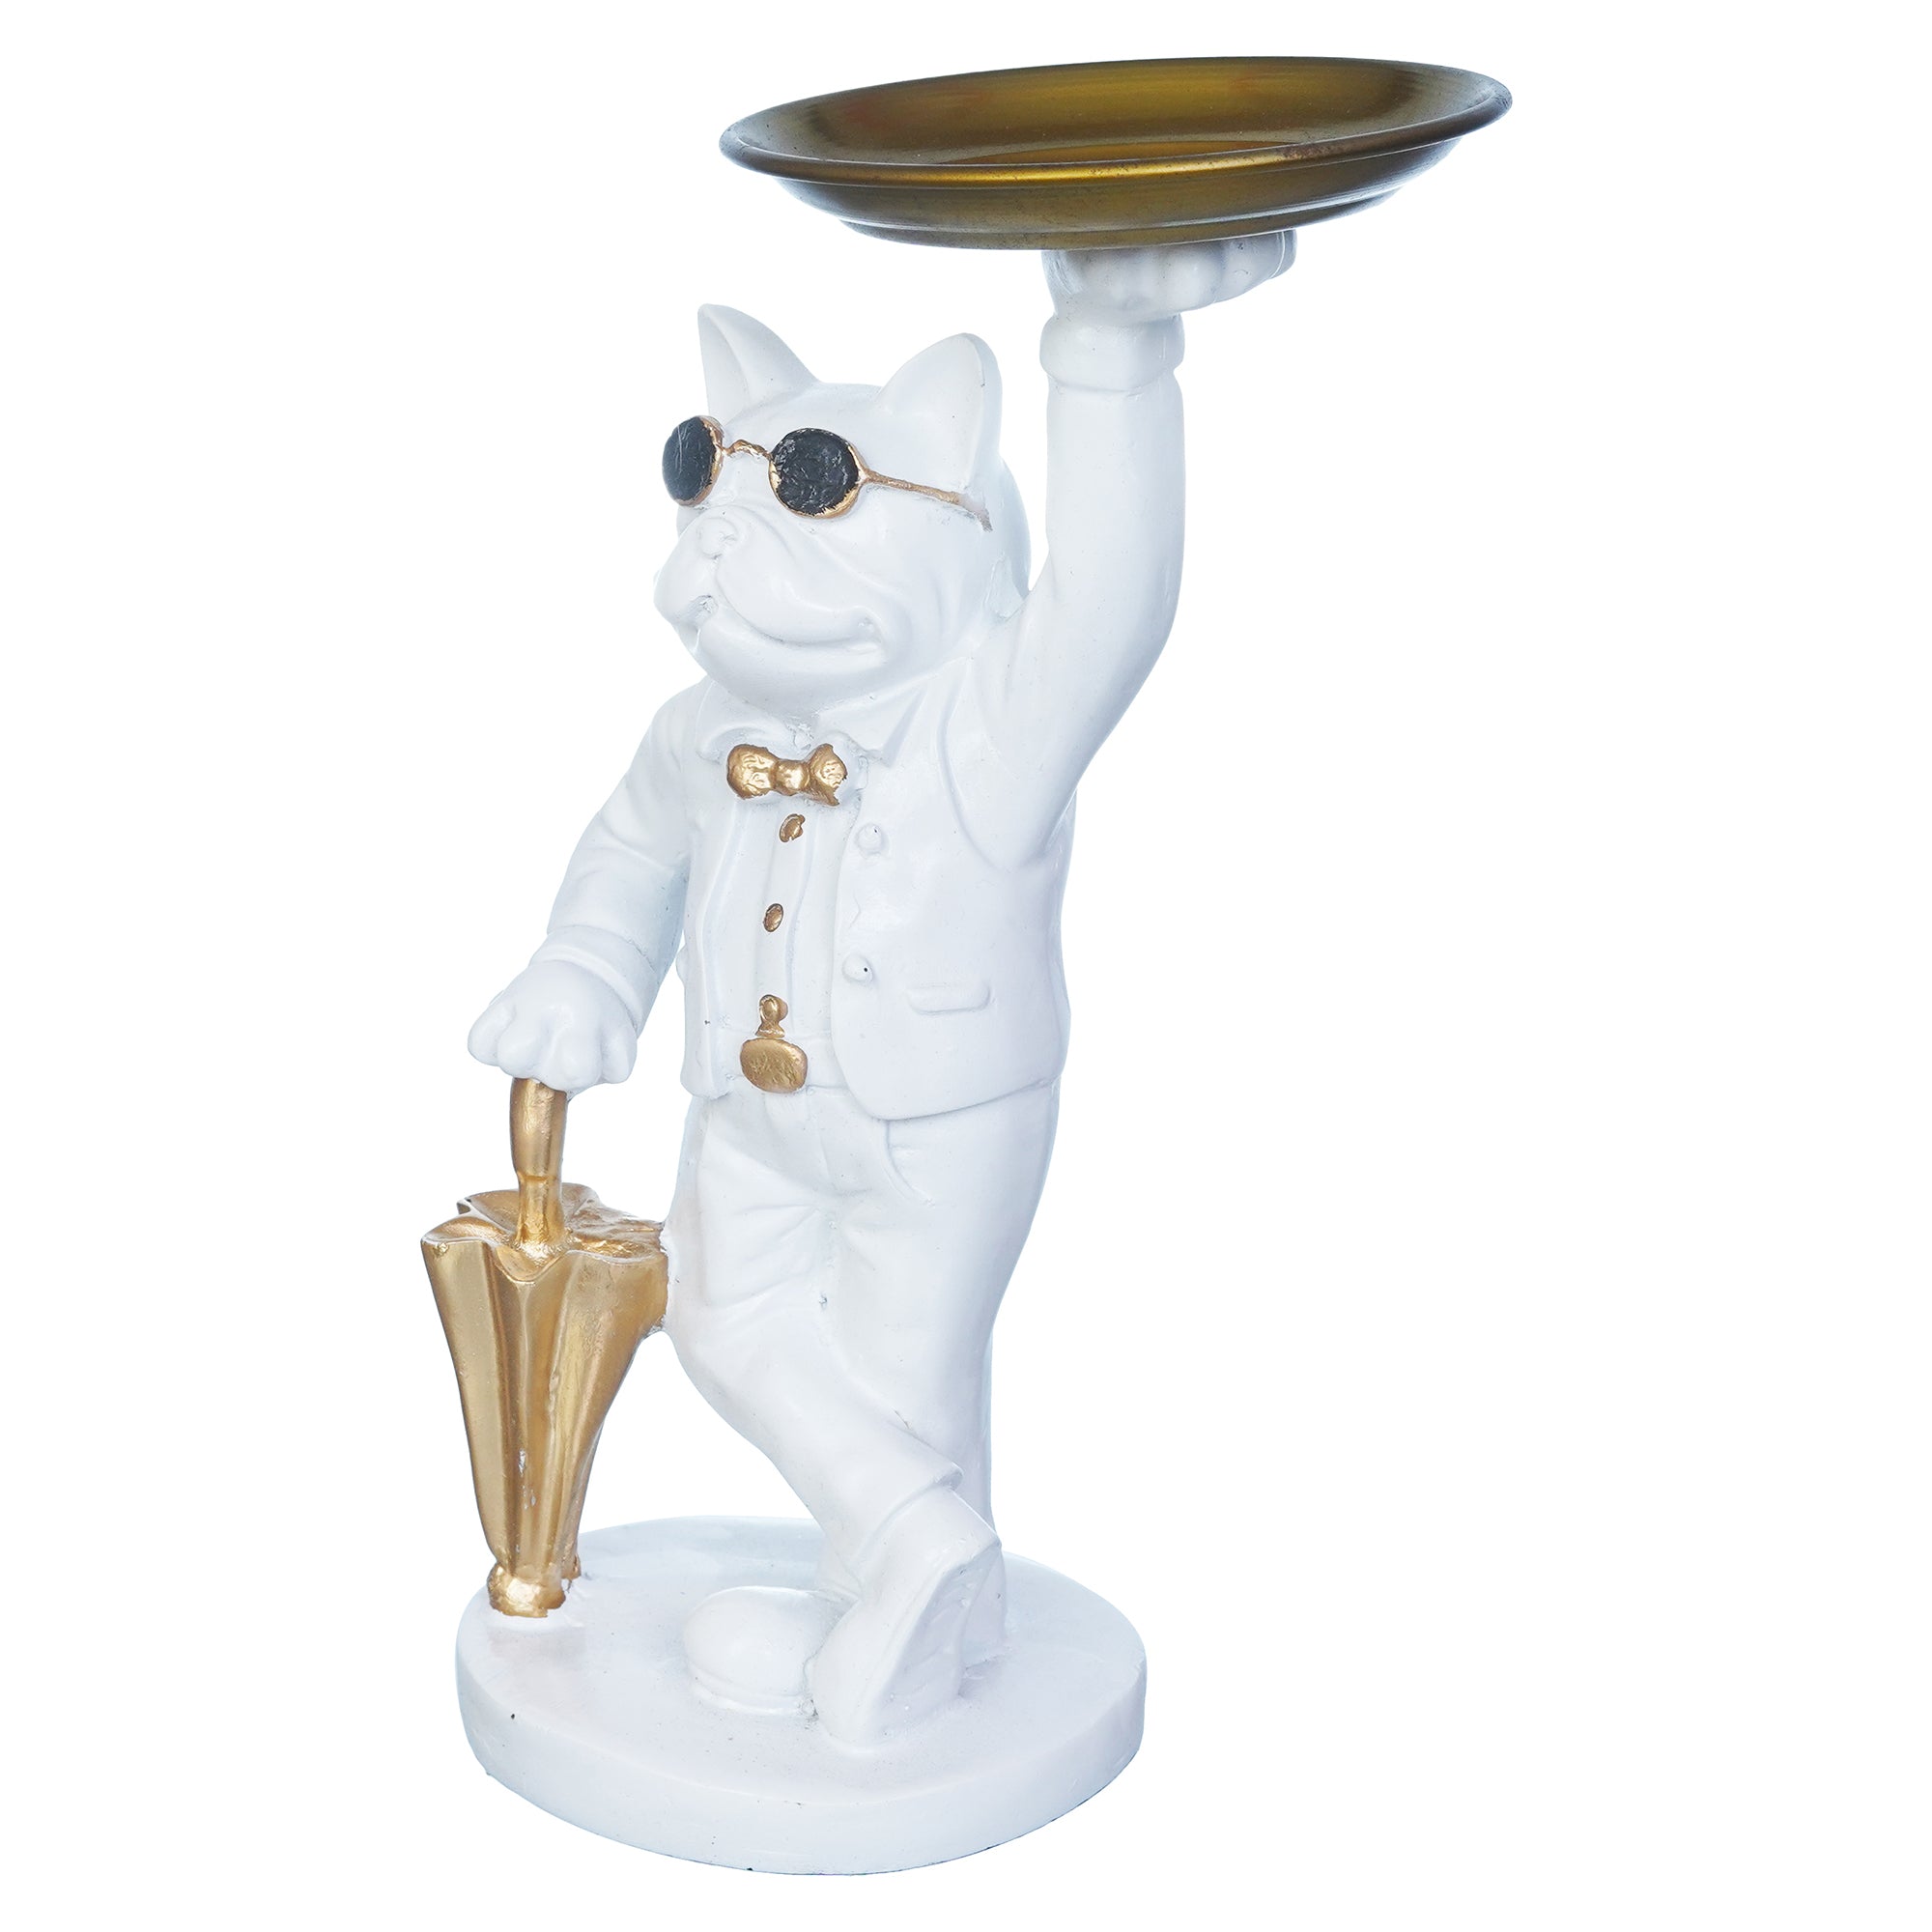 White Bulldog Statue in Glasses Holding Golden Umbrella and Tray in Hands Table Top Decorative Showpiece 7